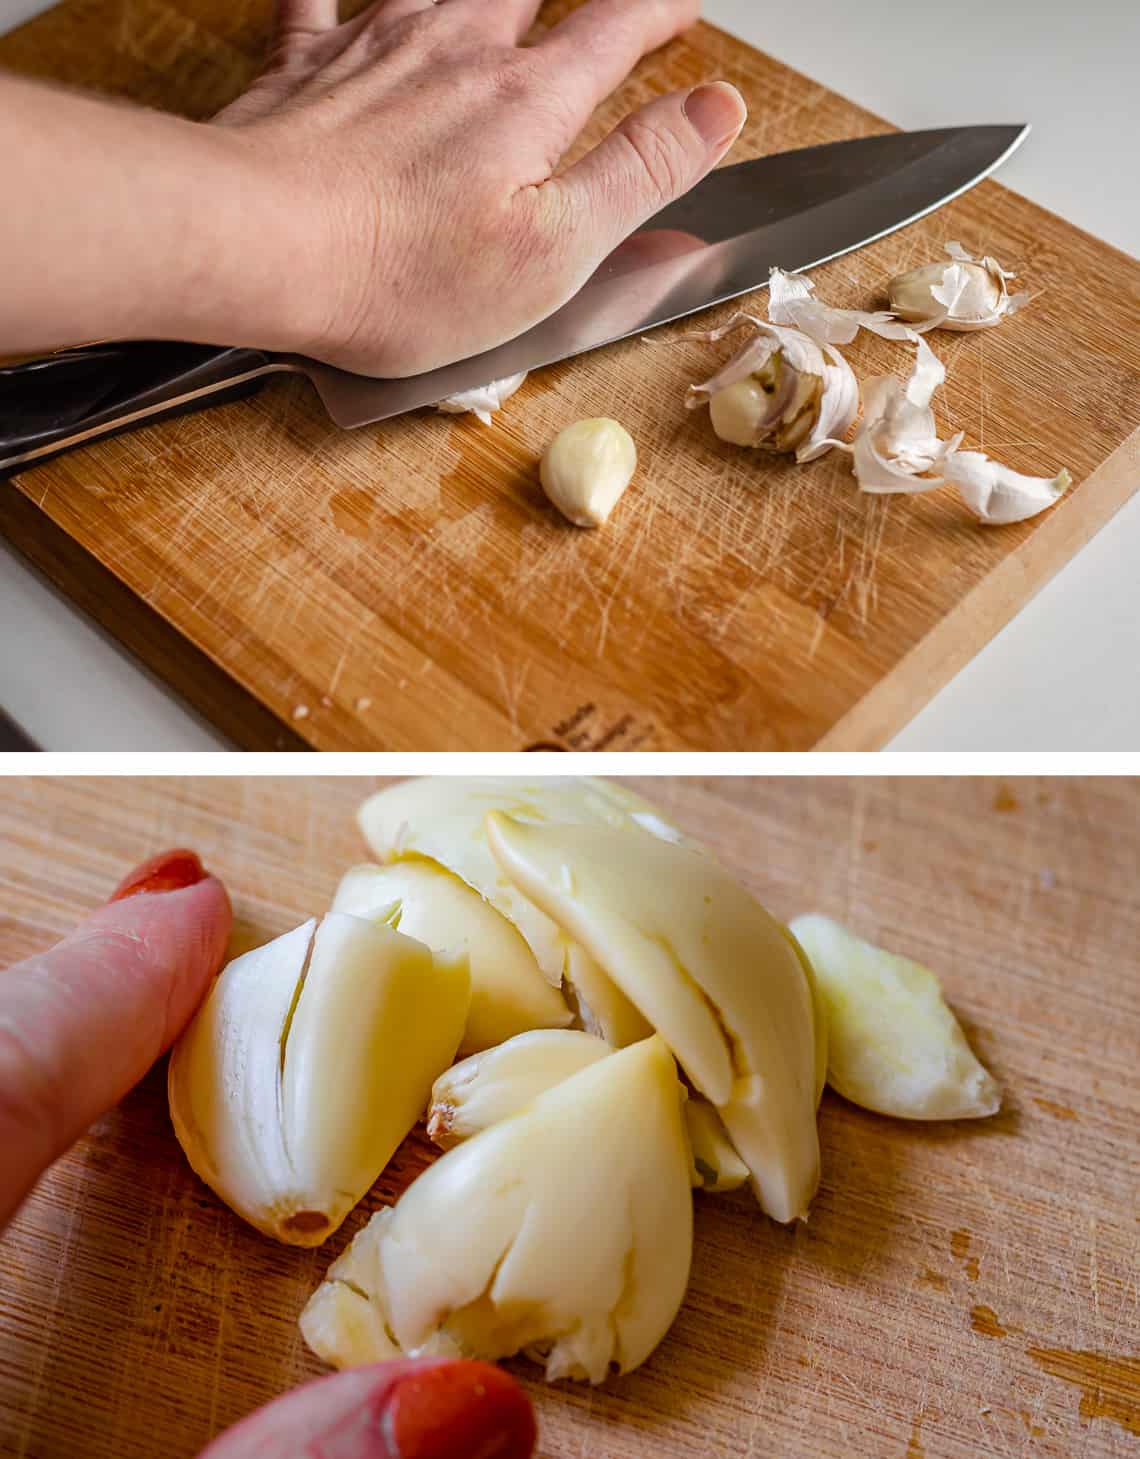 top chef's knife smashing garlic cloves, bottom fingers on smashed, skinless garlic.